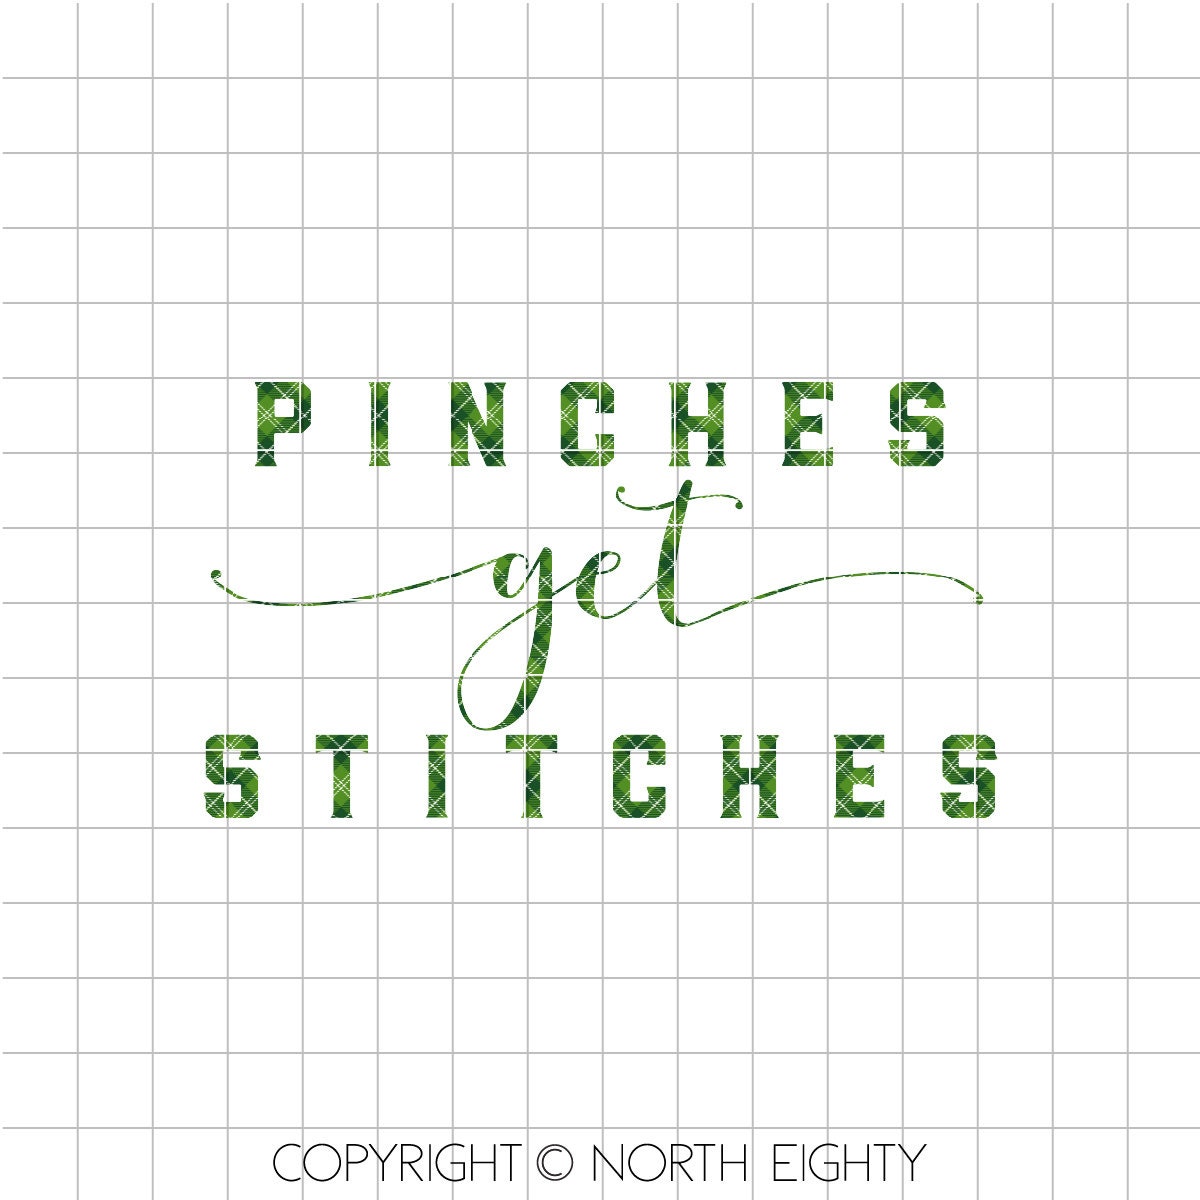 St Patrick's Day Sublimation Design - Pinches Get Stitches Digital Download - Clip Art - Tartan